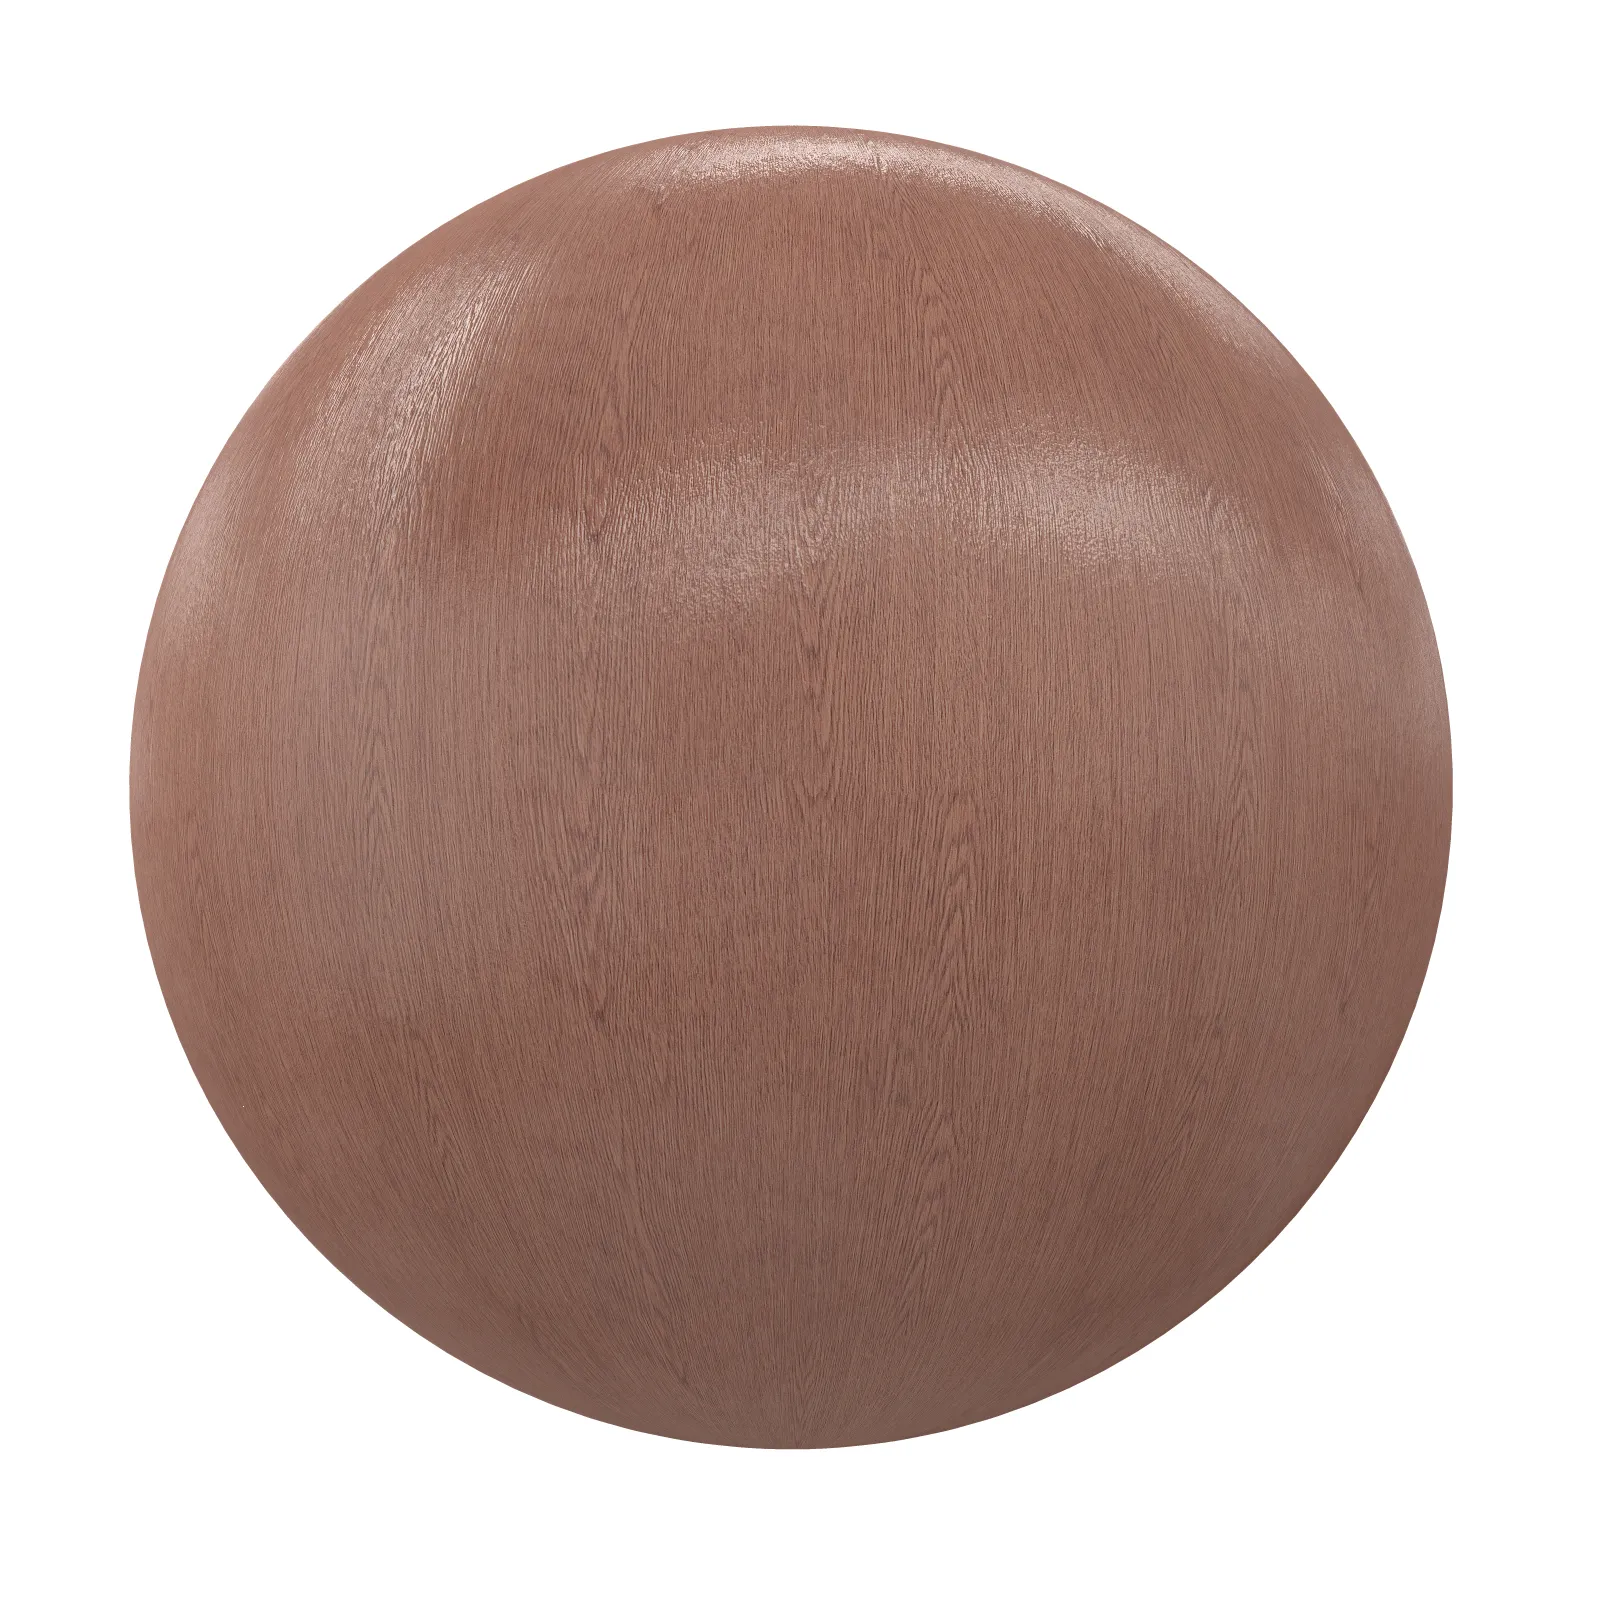 3ds Max Files – Texture – 8 – Wood Texture – 94 – Wood Texture by Minh Nguyen